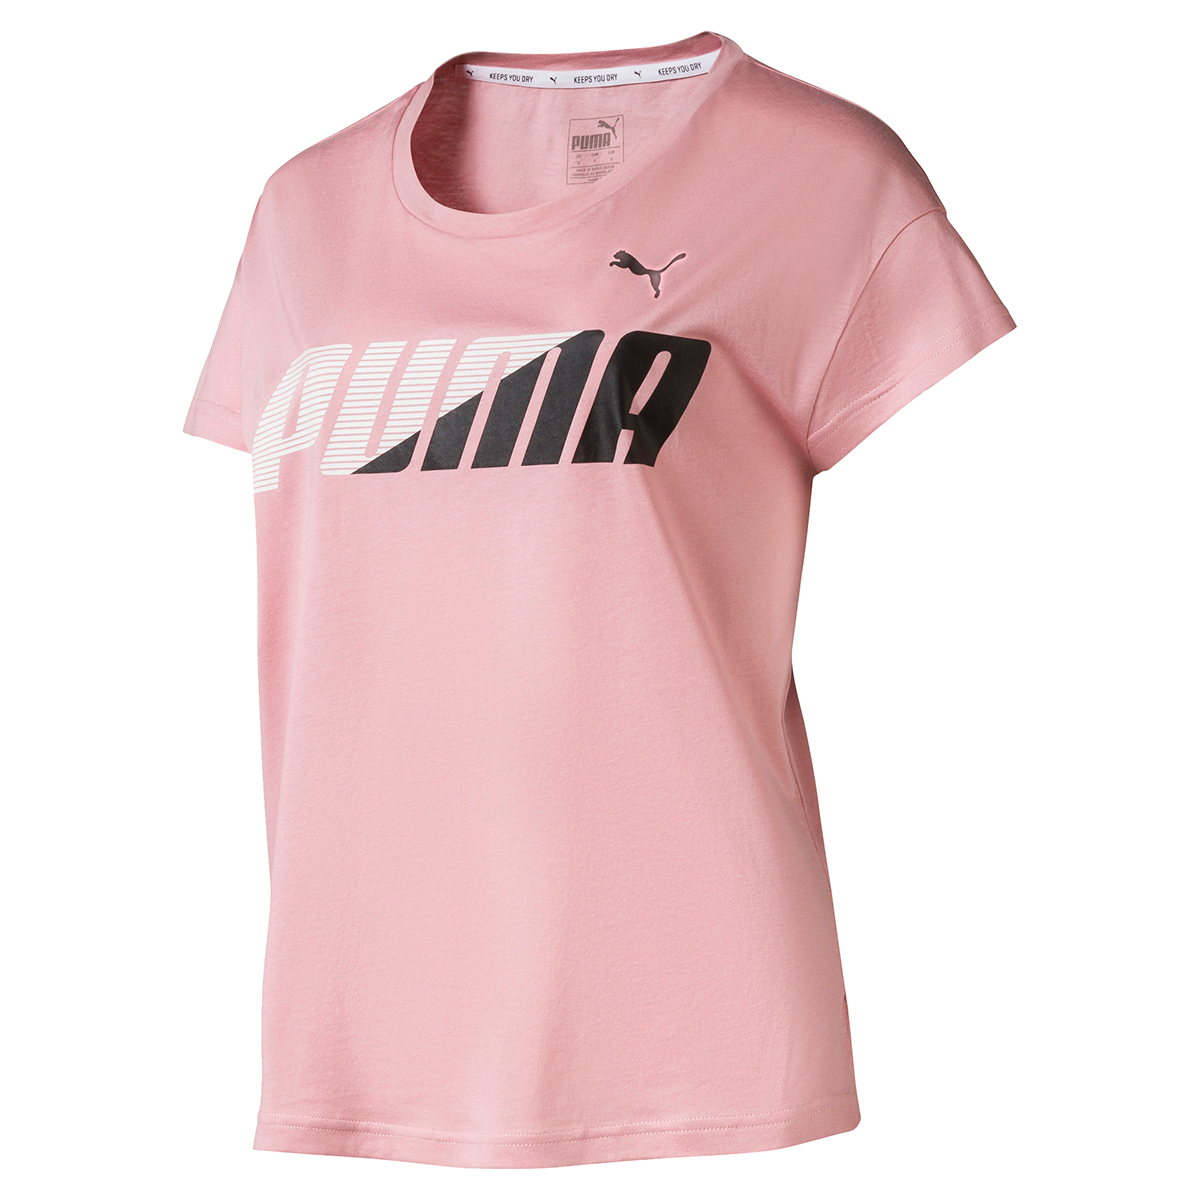 PUMA Damen Modern Sports Graphic Tee DryCell T-Shirt pink 580075 14